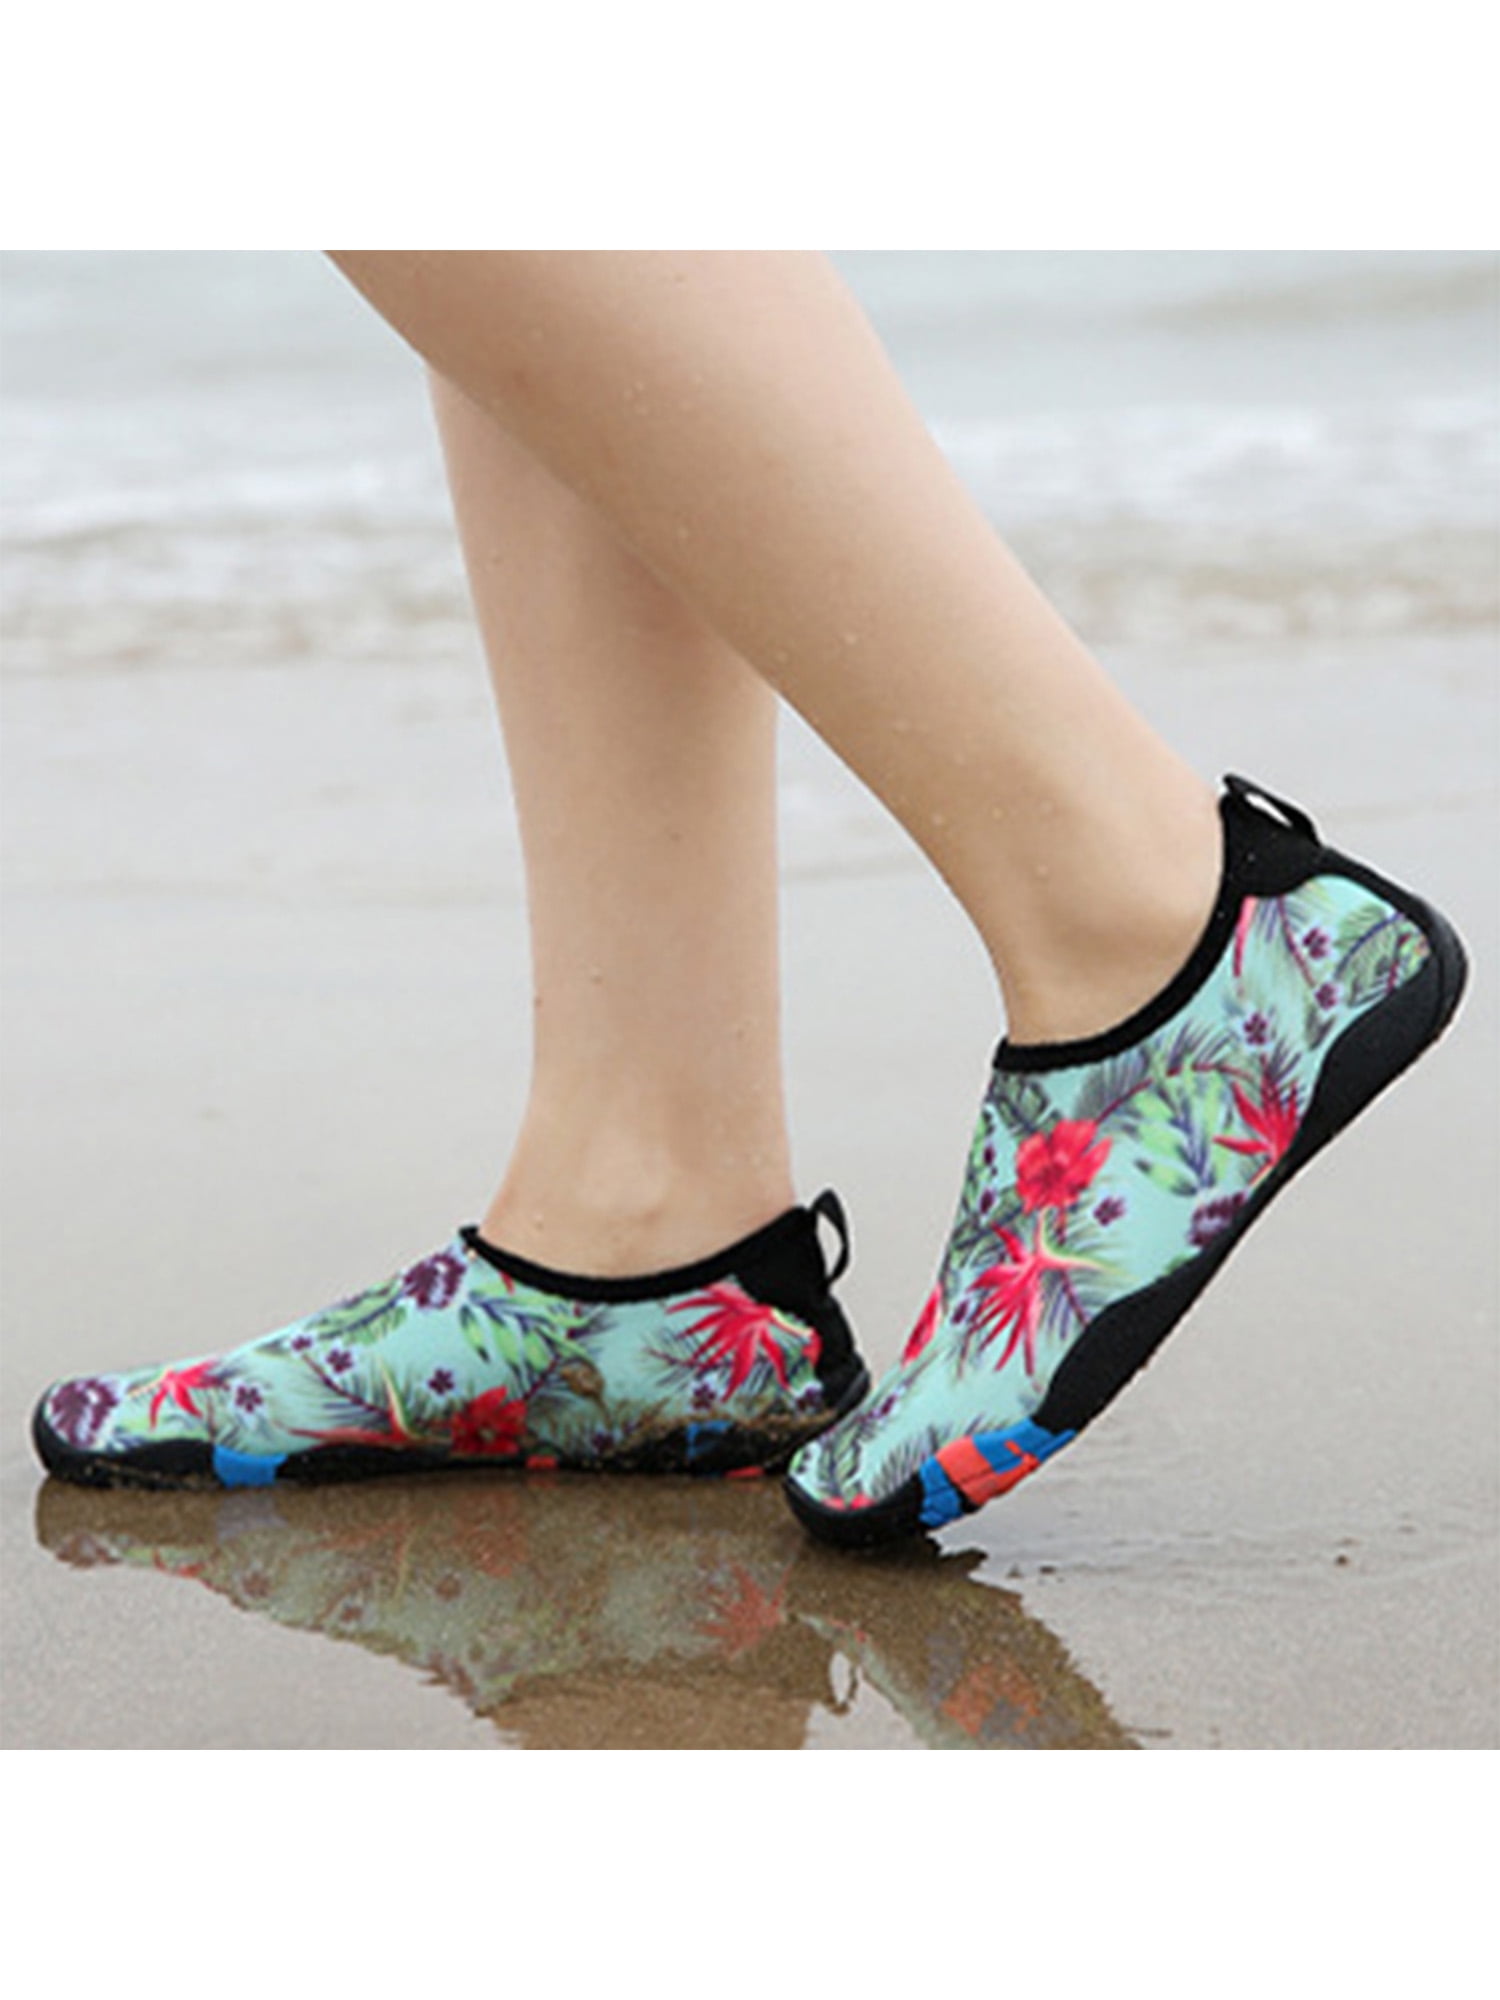 Unisex Adult/Kid Water Shoes Socks Diving Socks Wetsuits Non-slip Swim Beaches 